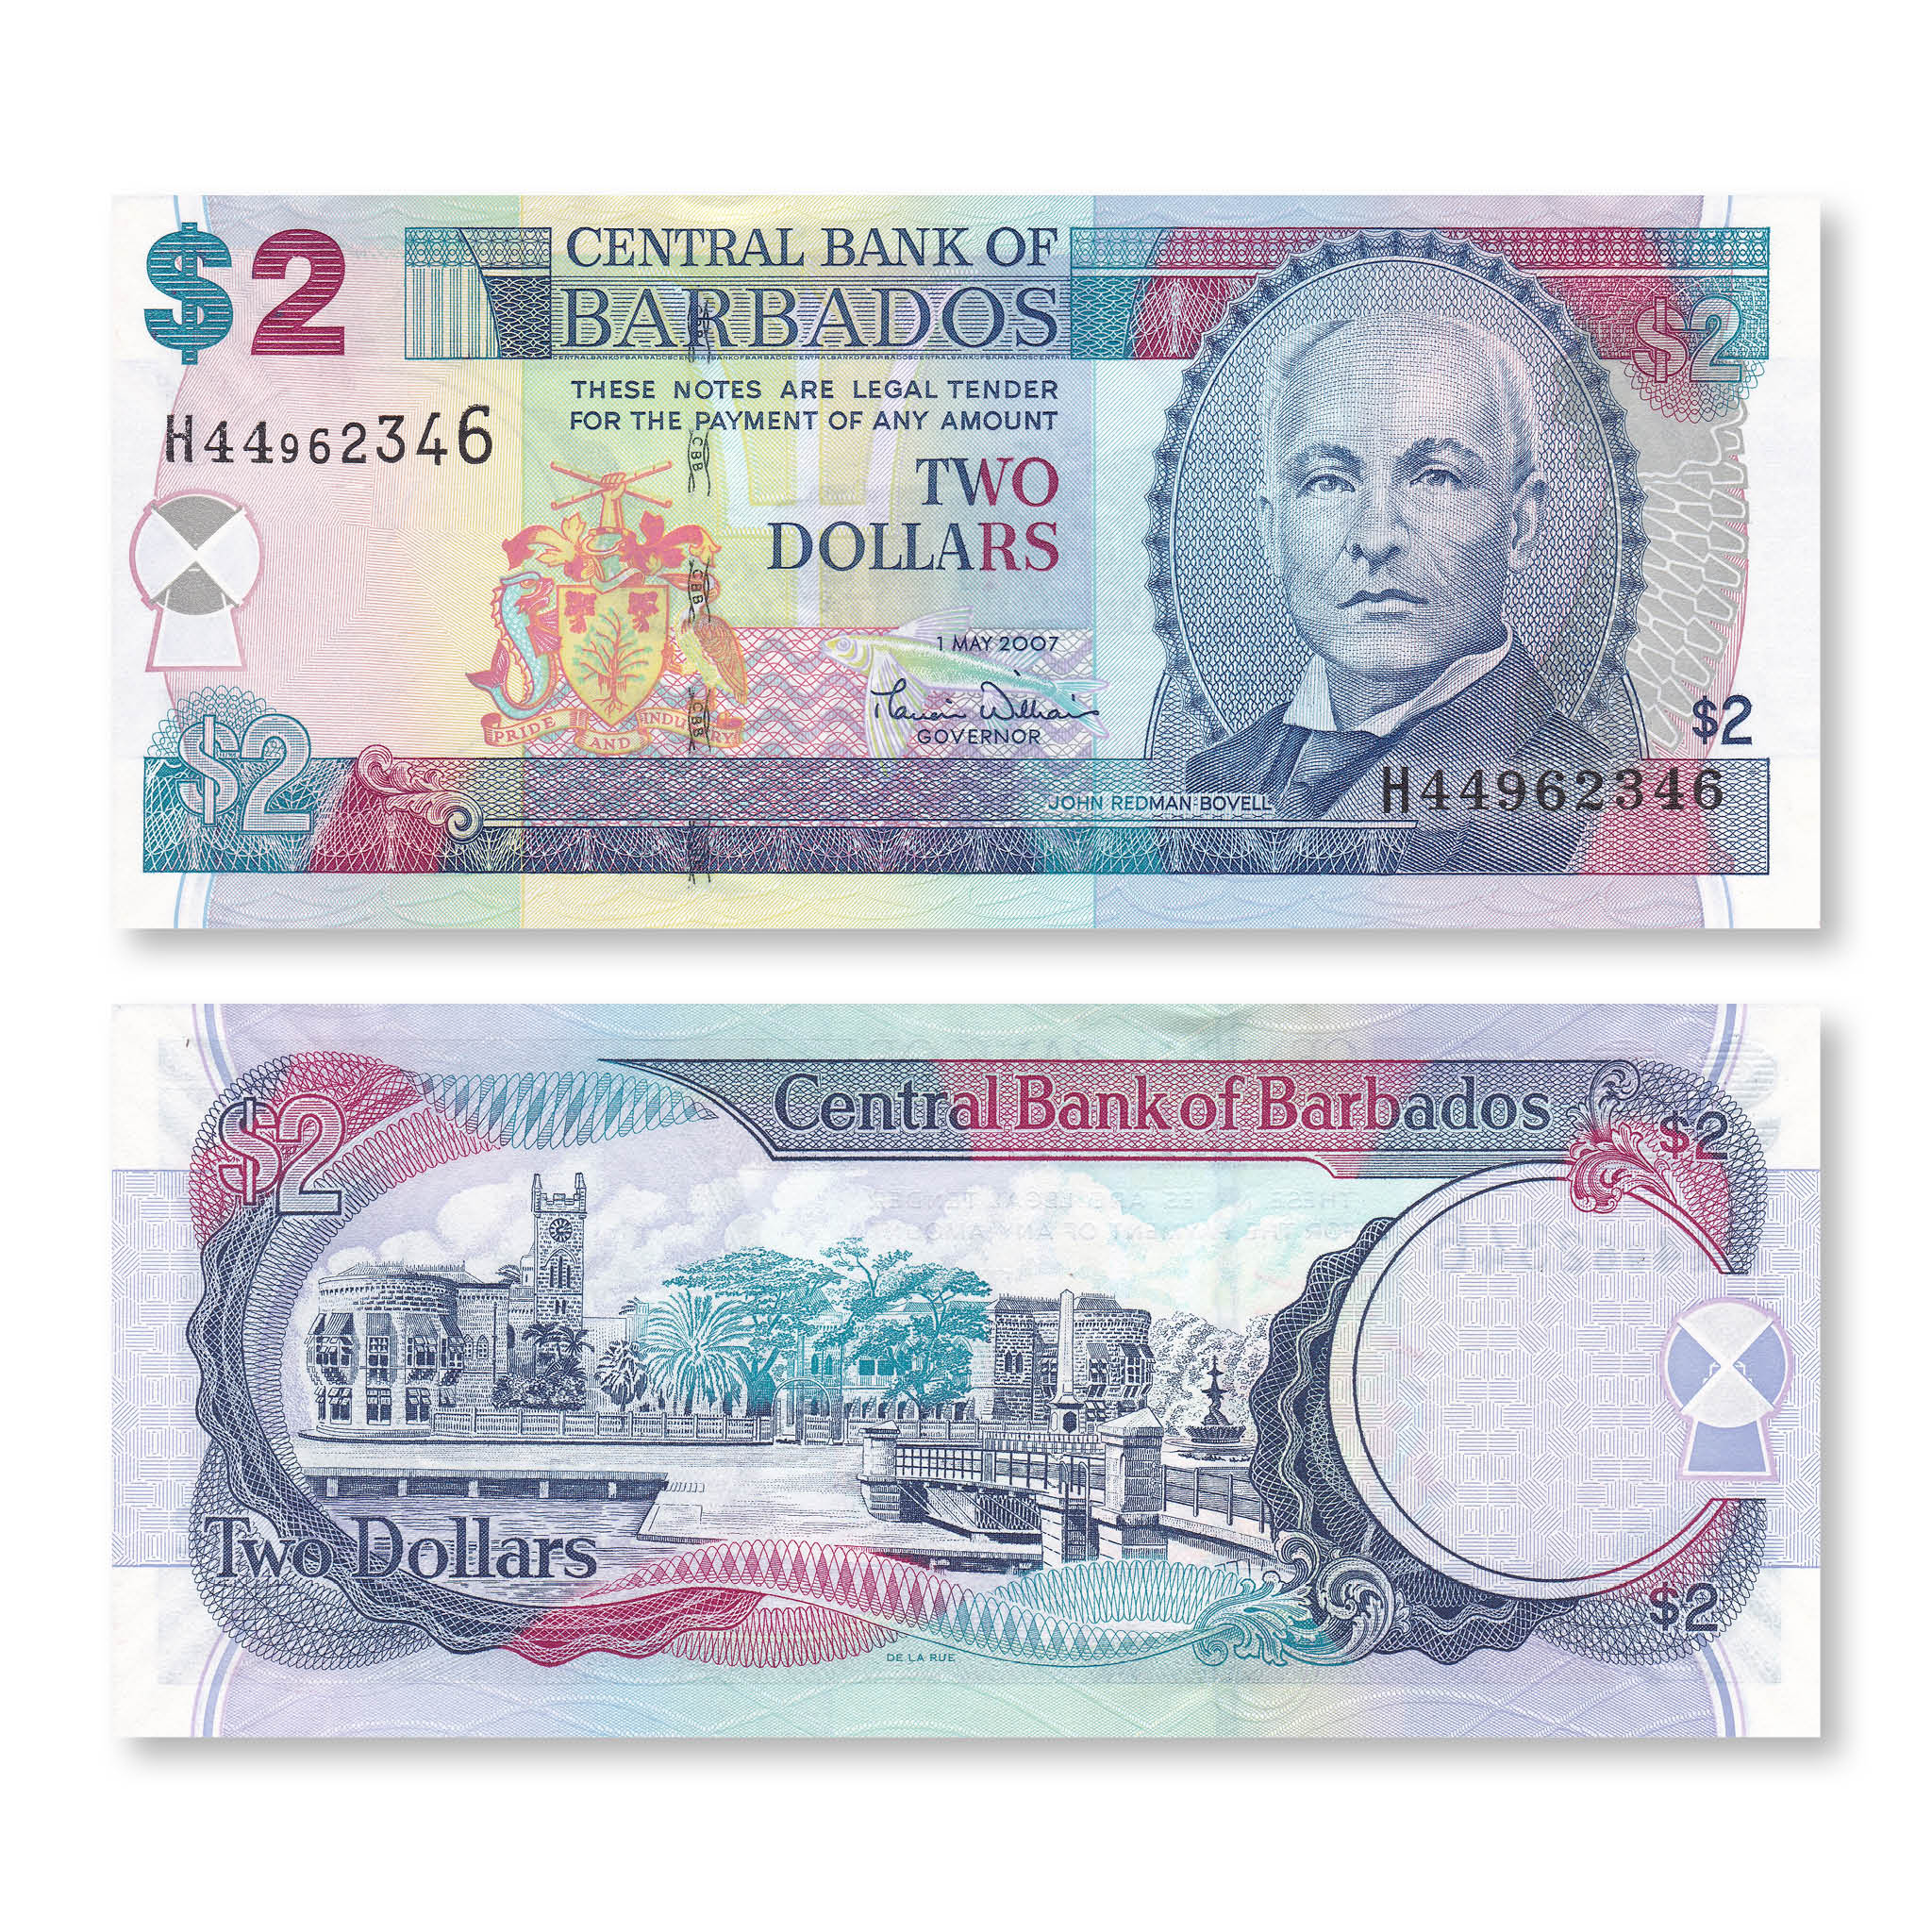 Barbados 2 Dollars, 2007, B225a, P66a, UNC - Robert's World Money - World Banknotes